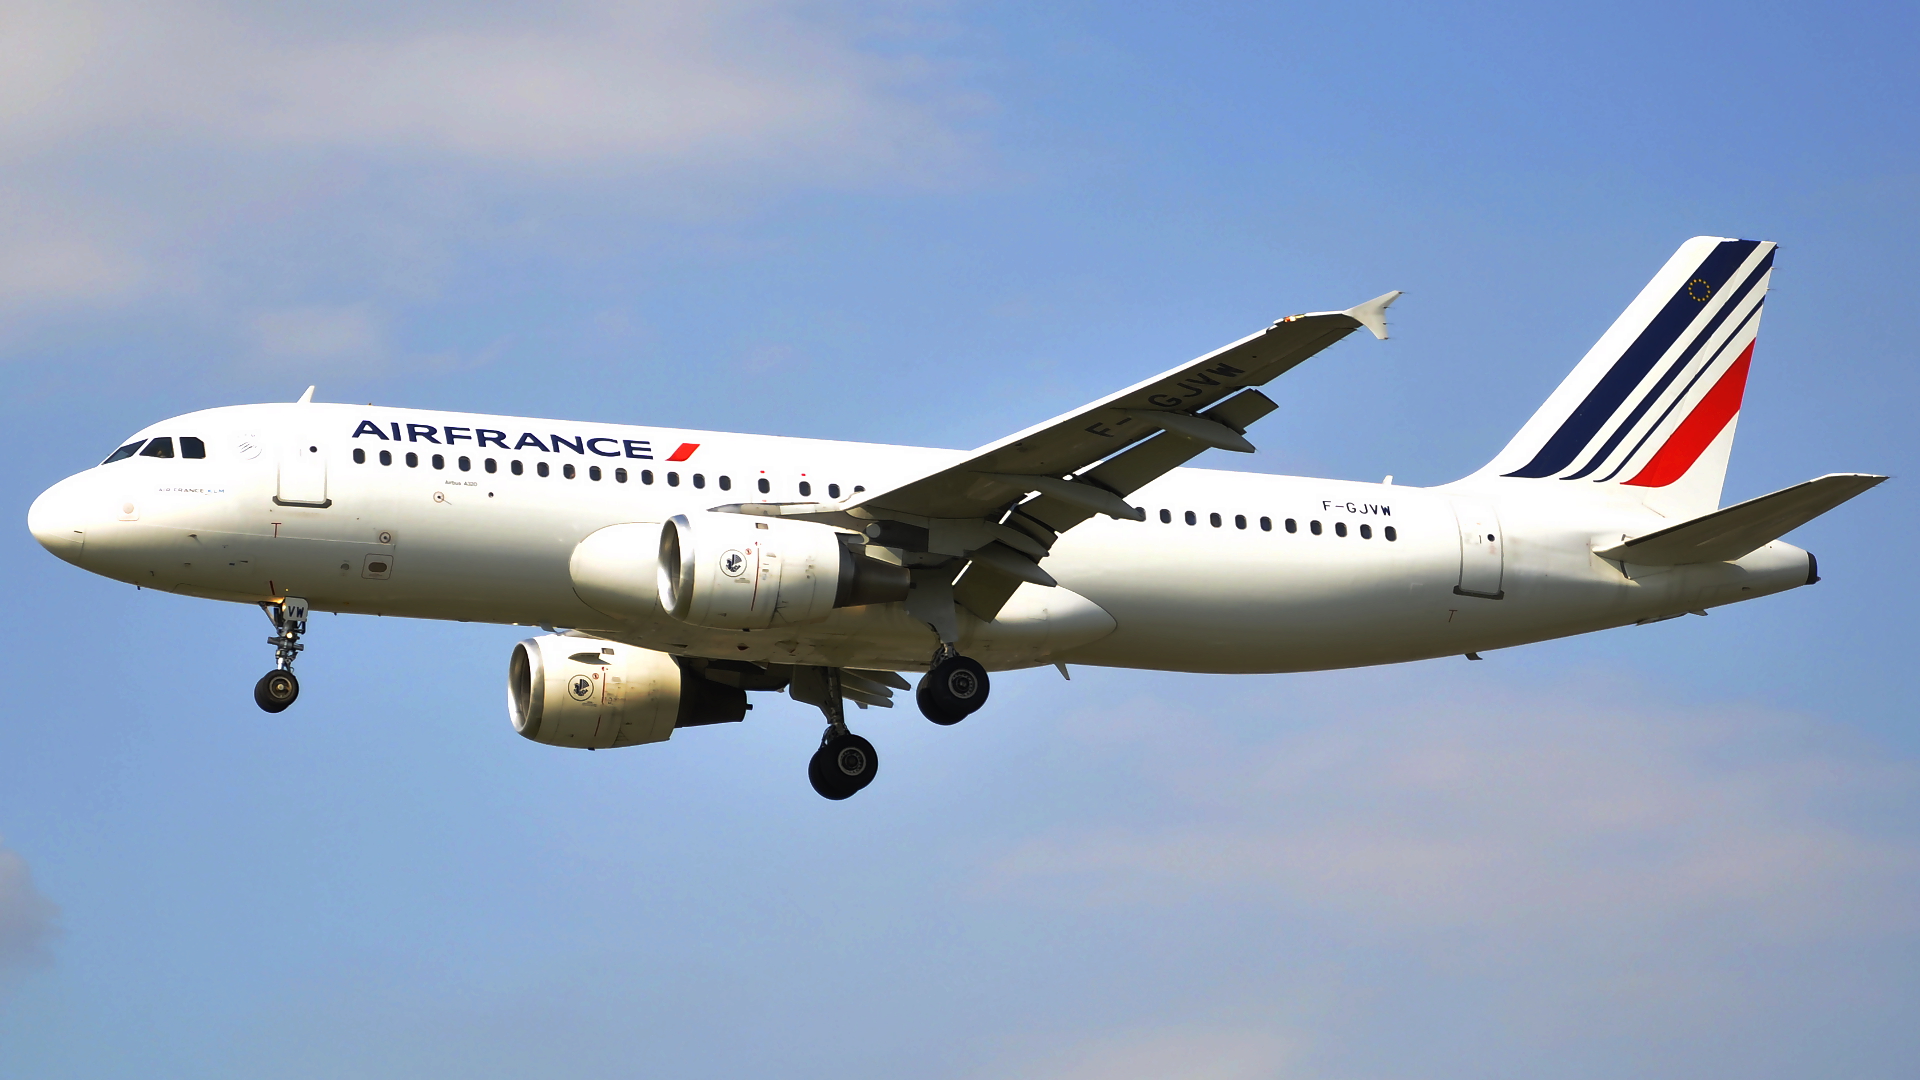 F-GJVW ✈ Air France Airbus 320-211 @ London-Heathrow